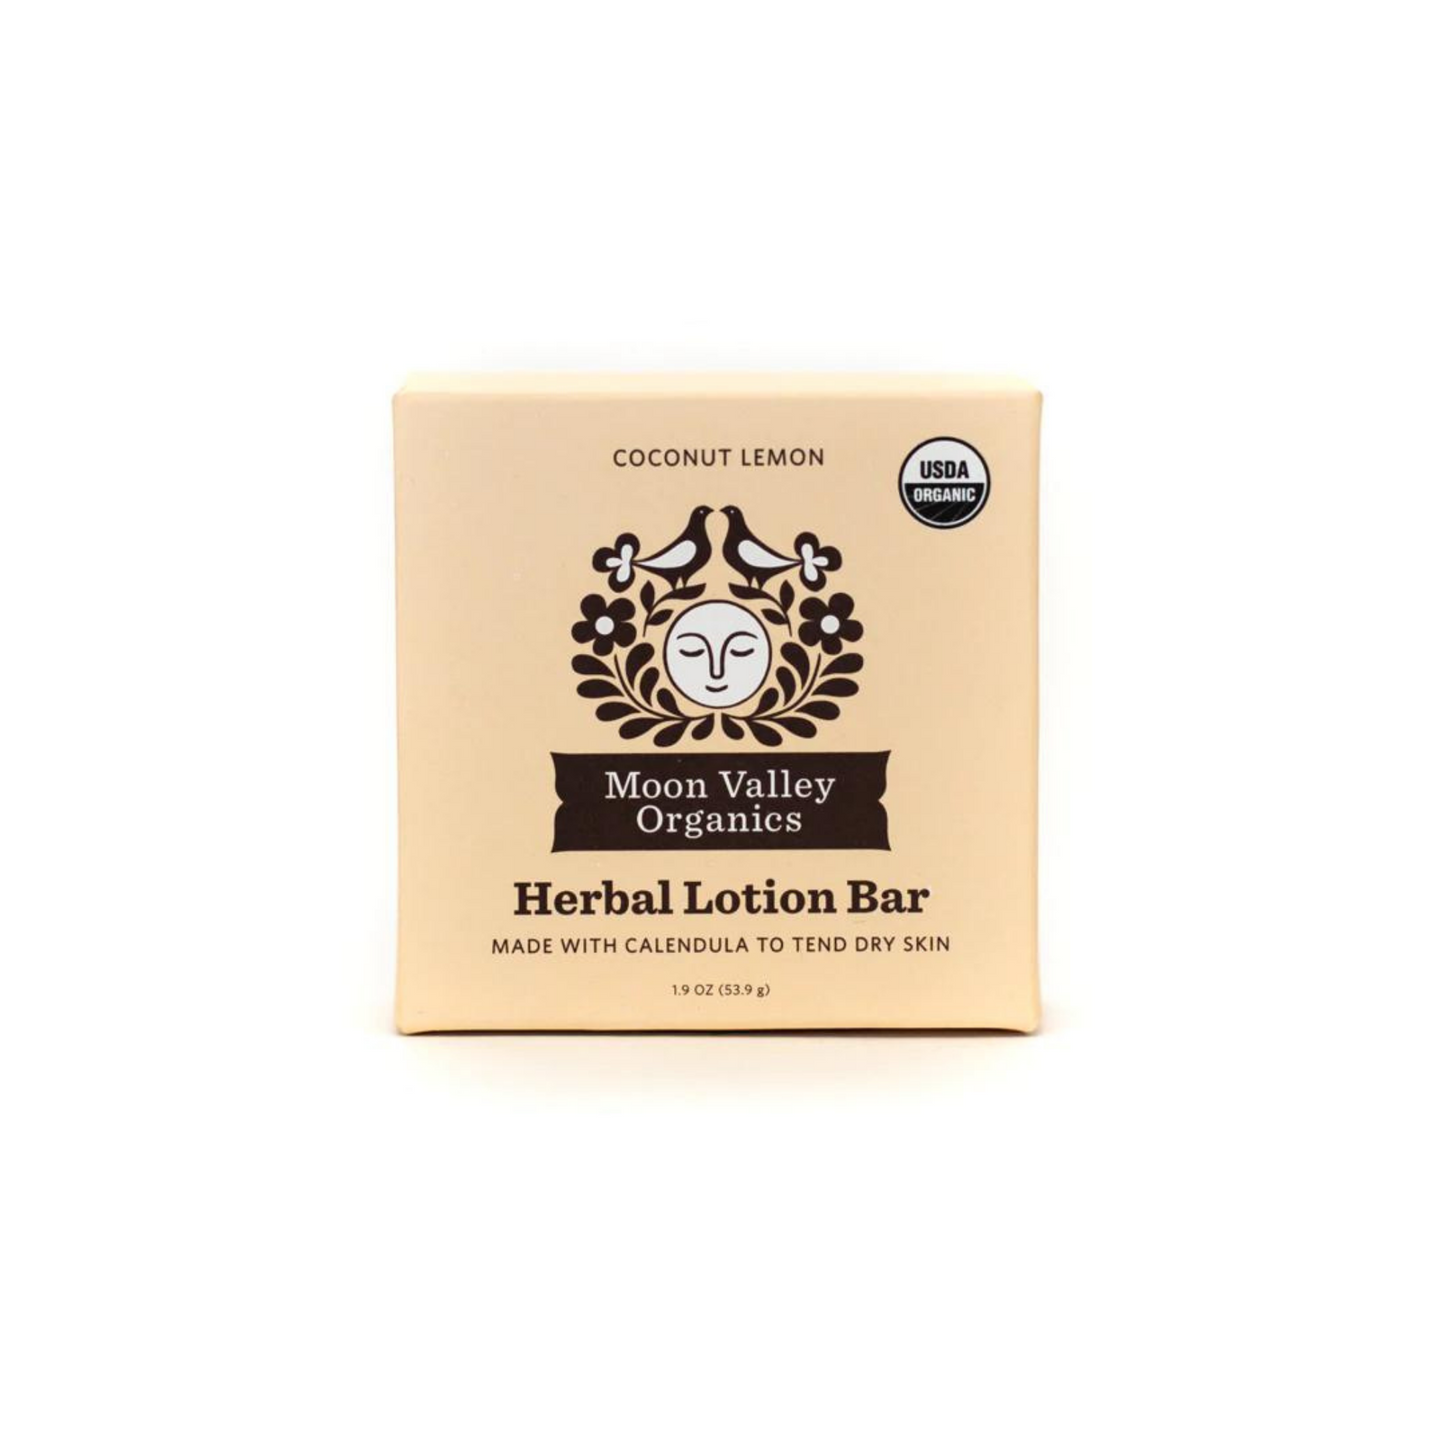 Primary Image of Coconut Lemon Herbal Lotion Bar